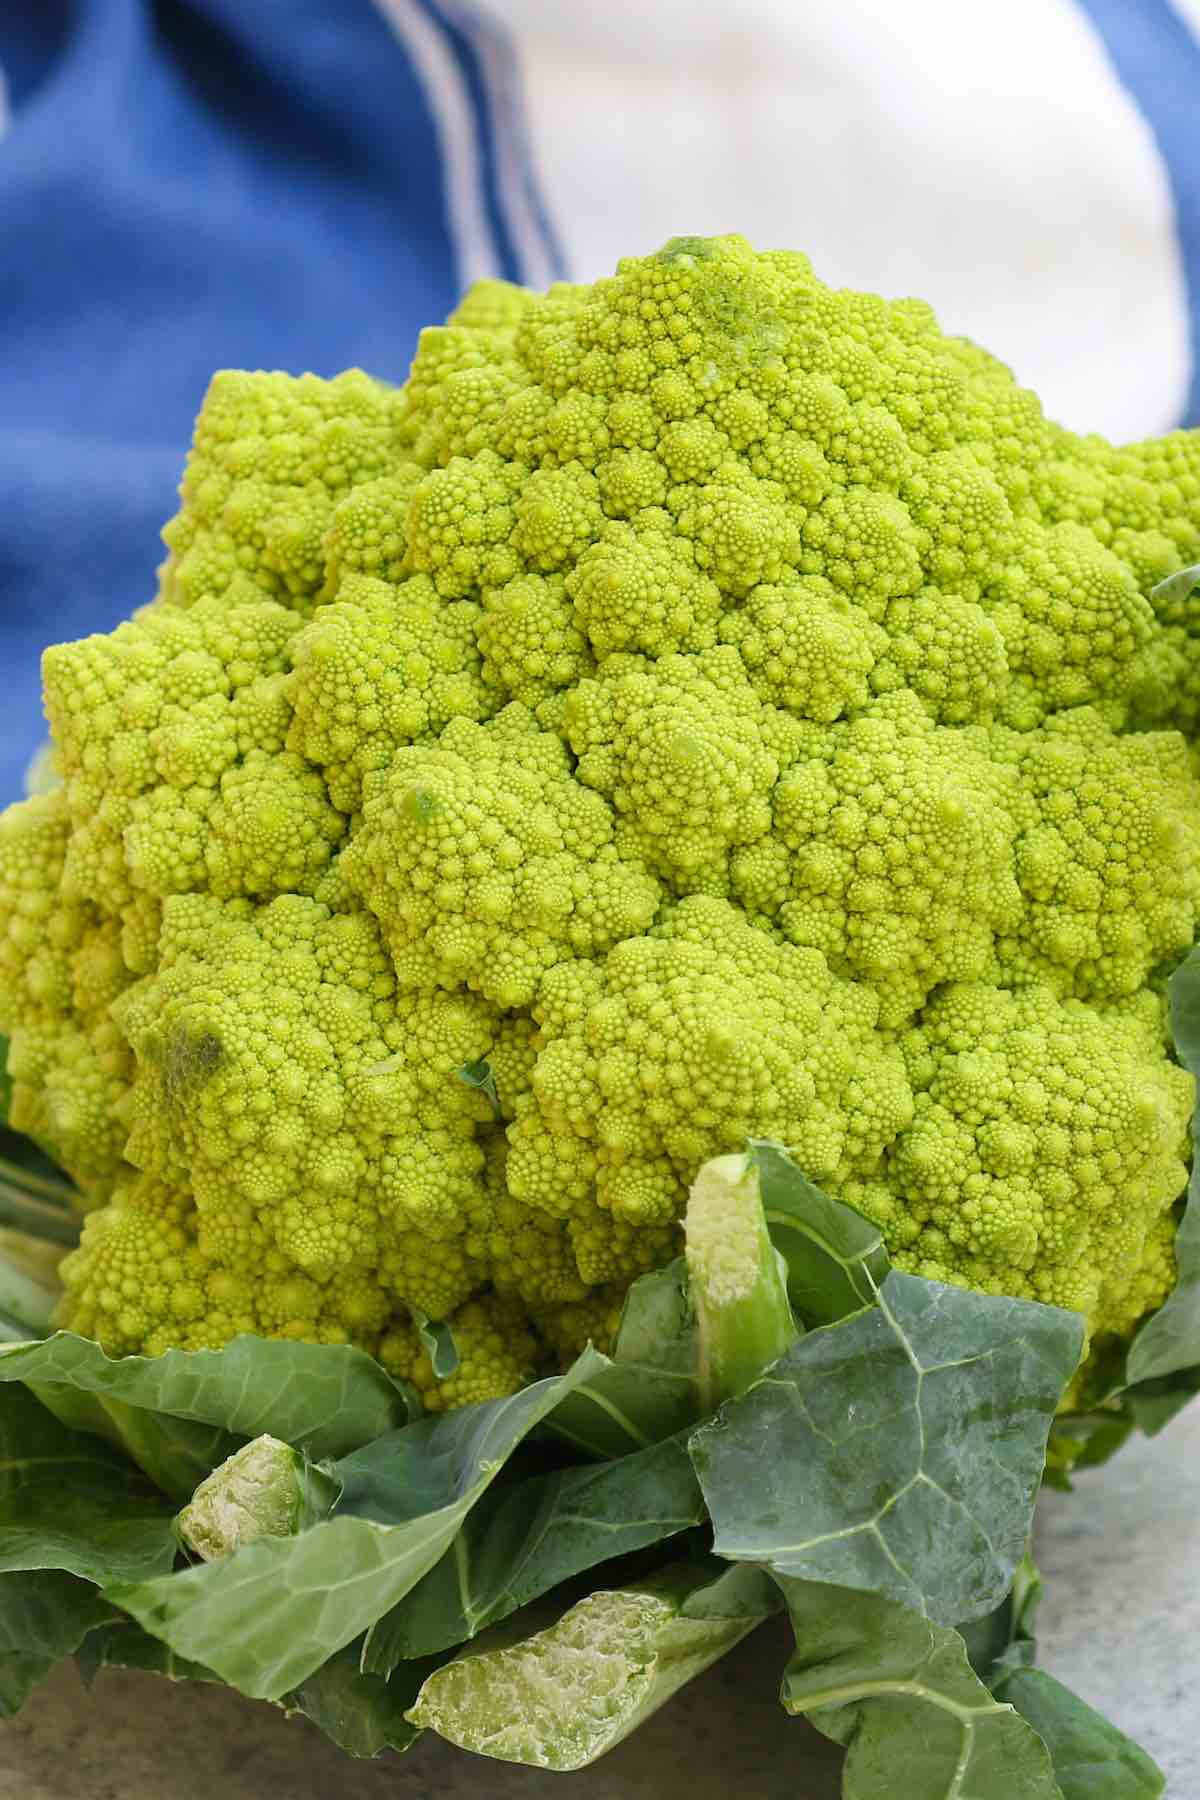 A head of fresh romanesco broccoli